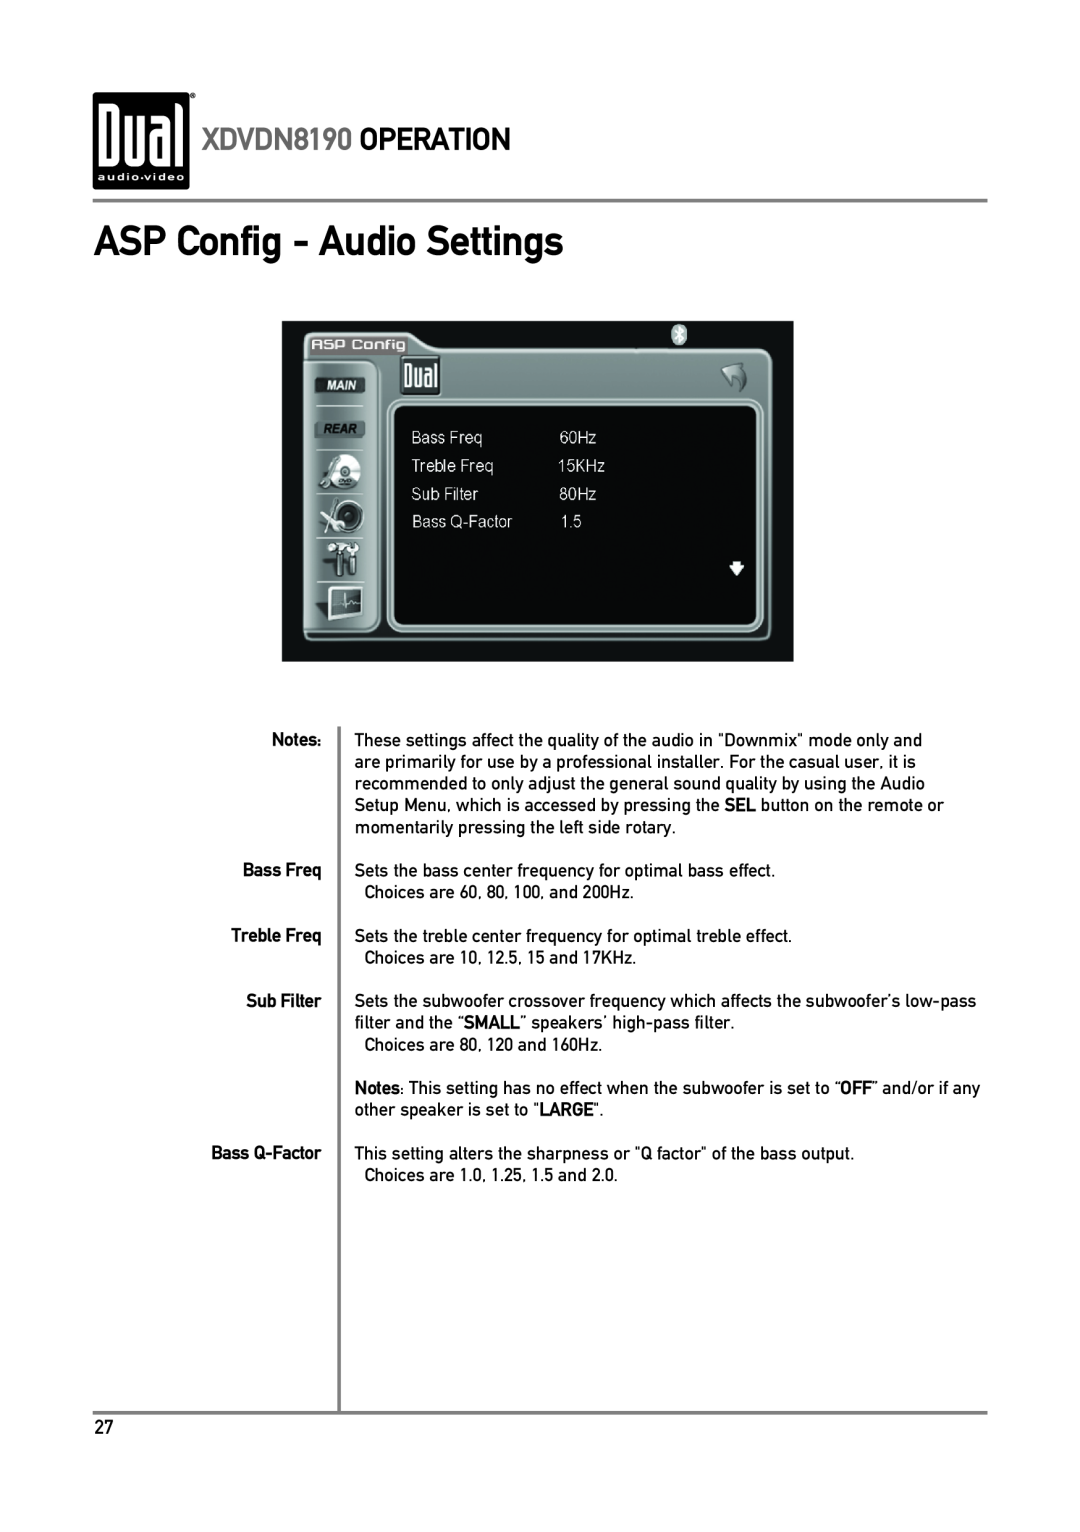 Dual ASP Config - Audio Settings, XDVDN8190 OPERATION, Notes Bass Freq Treble Freq Sub Filter, Bass Q-Factor 